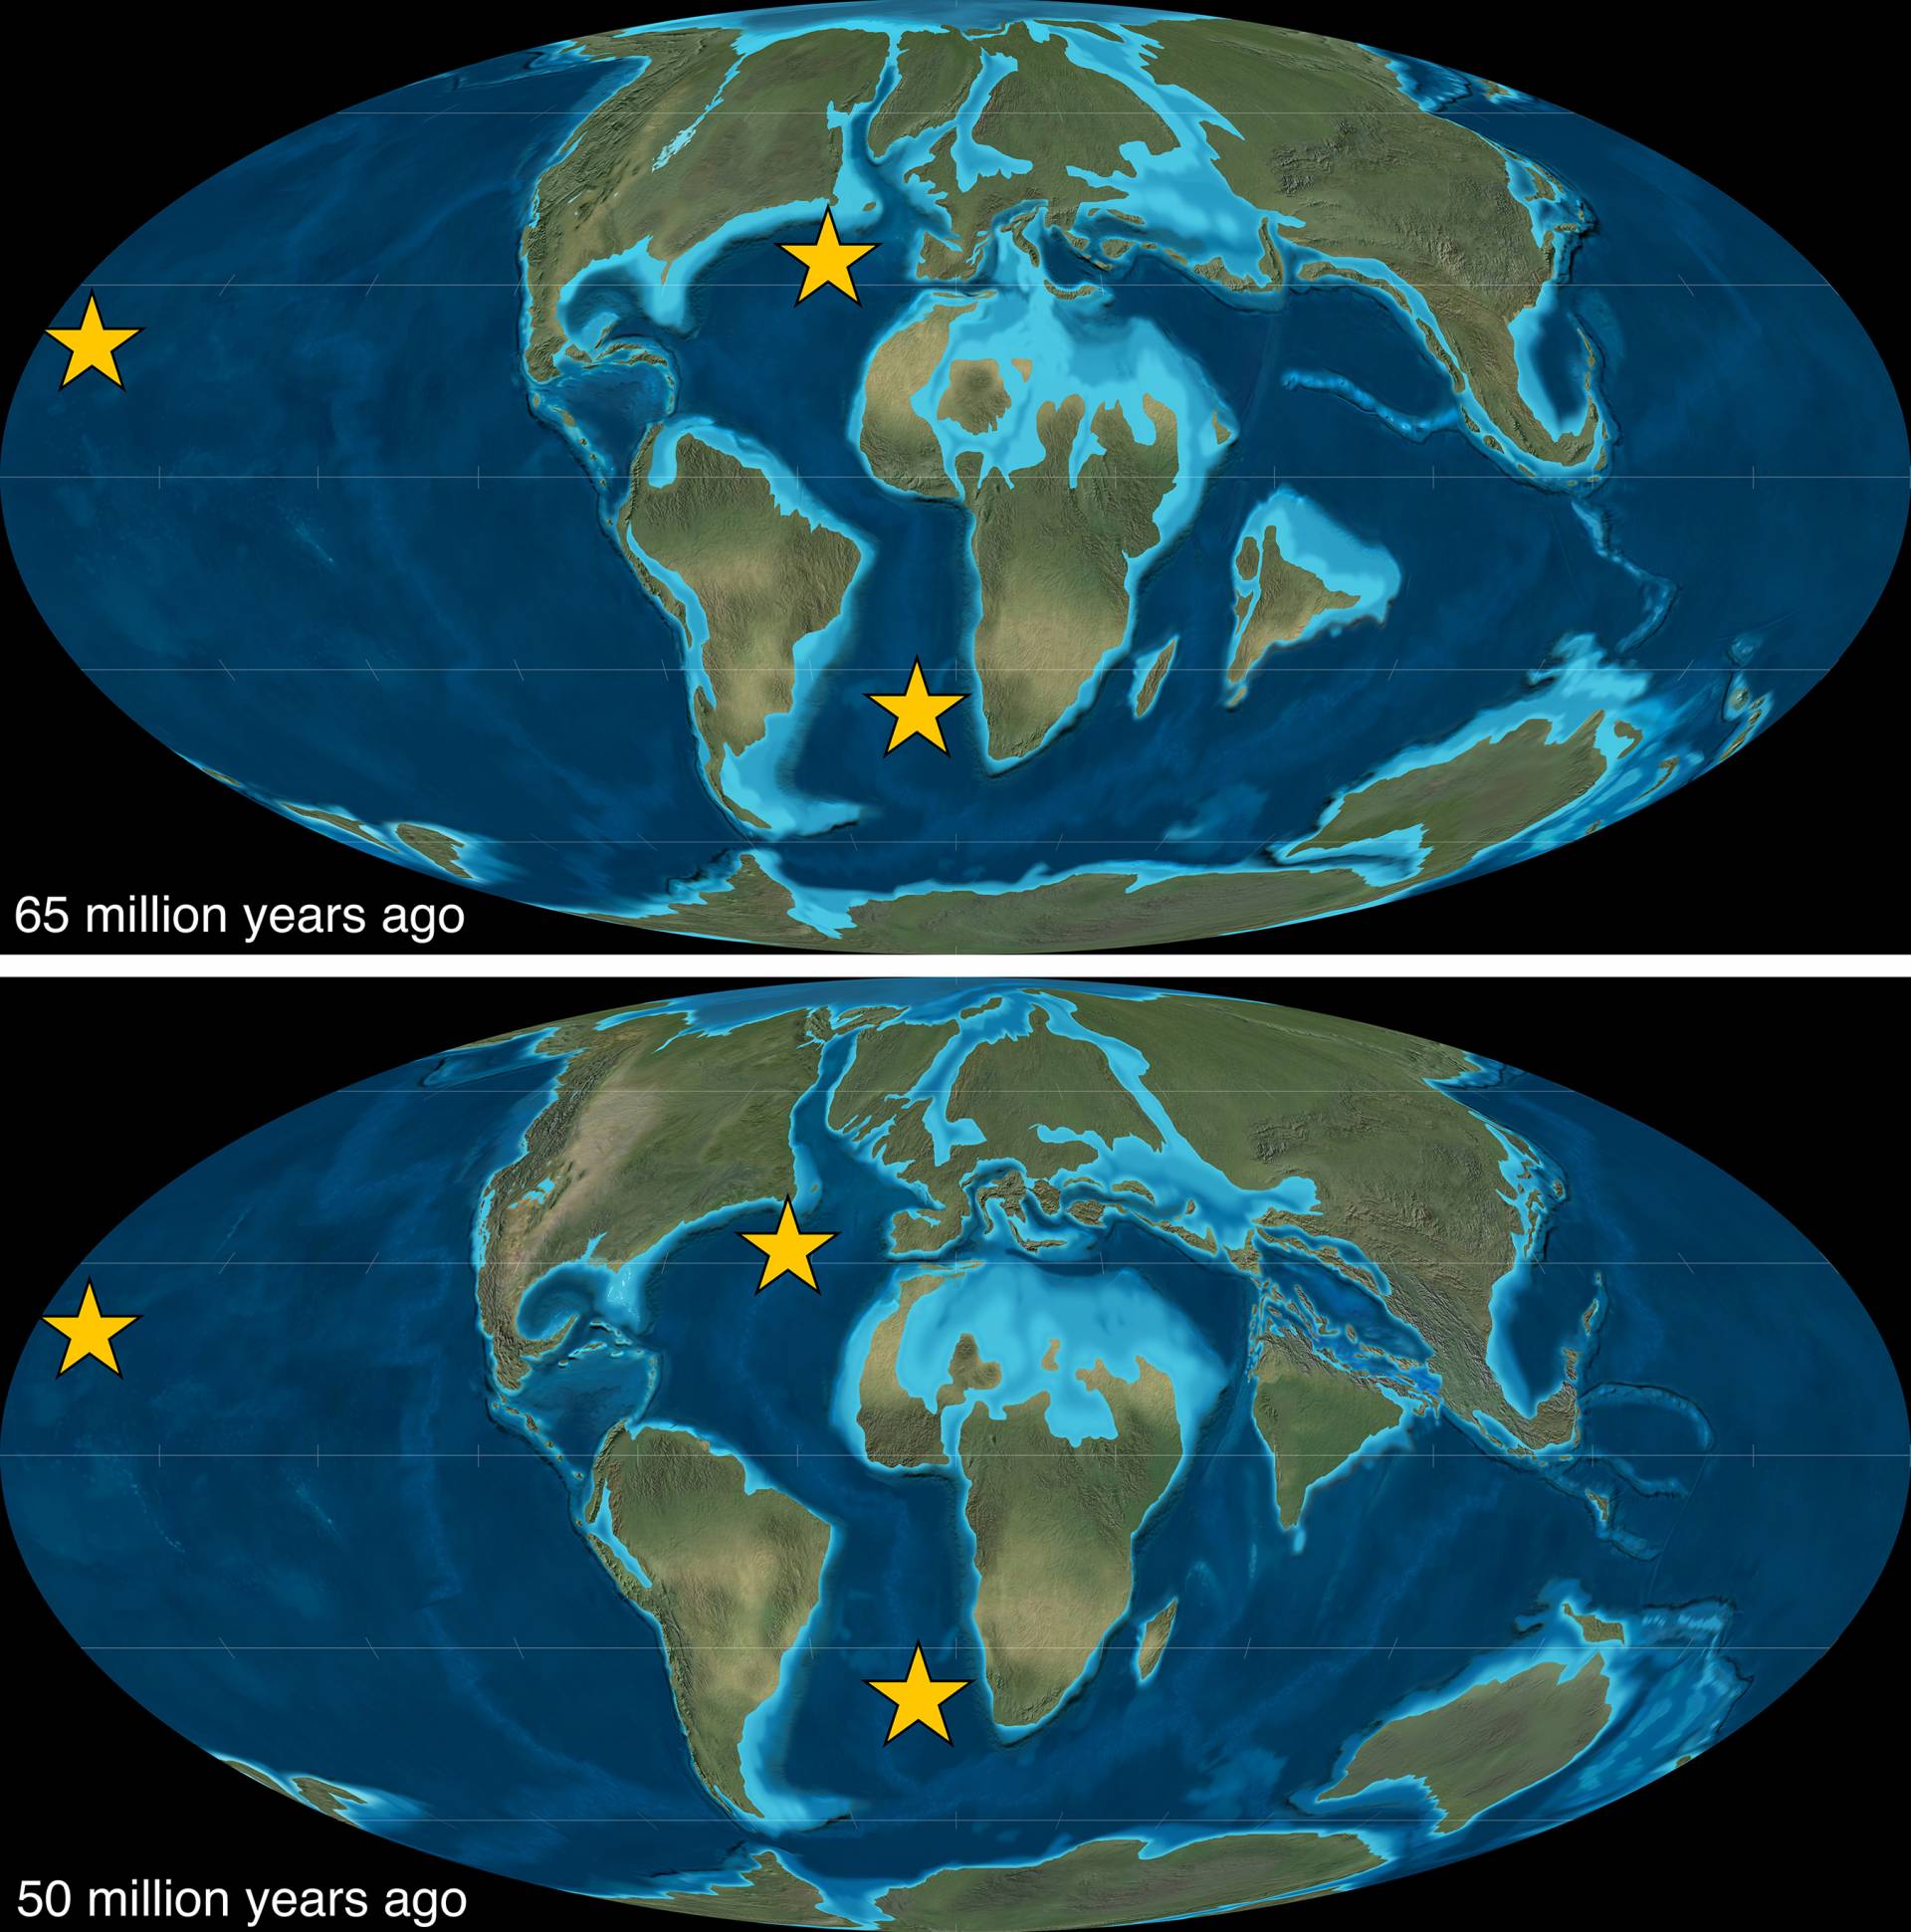 paleomap comparison 65 million years ago vs 50 million years ago